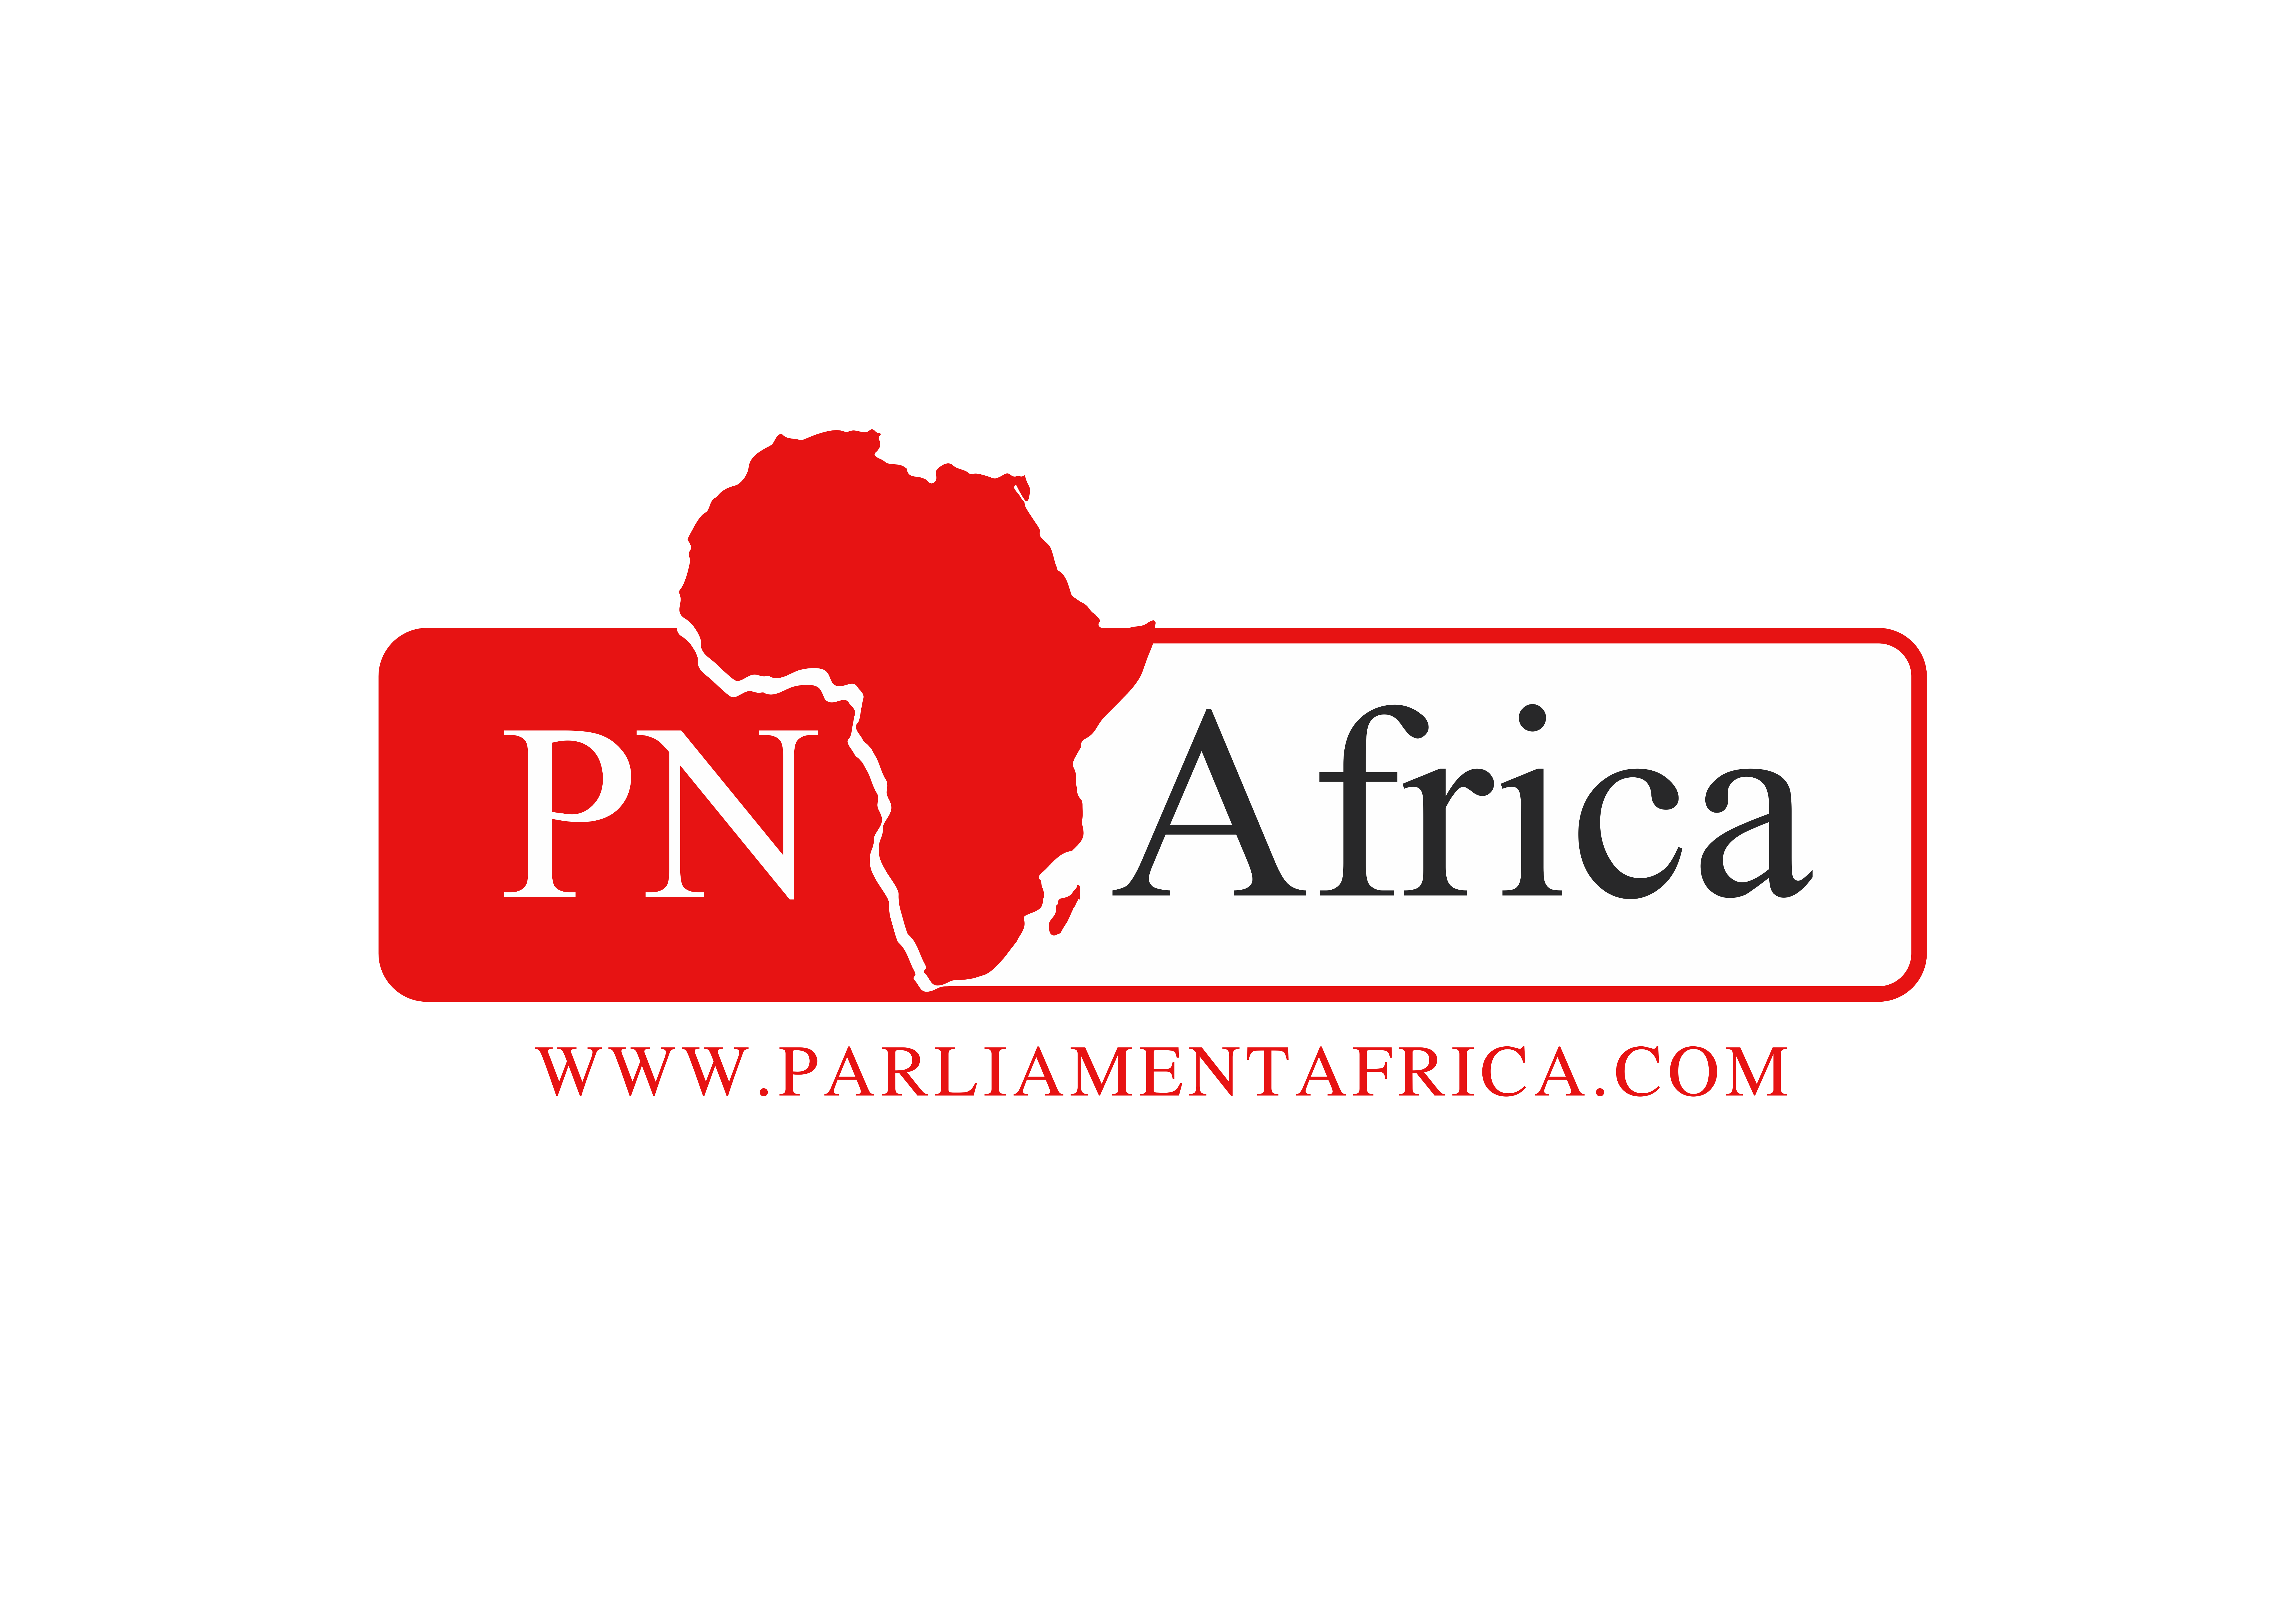 Parliamentafrica